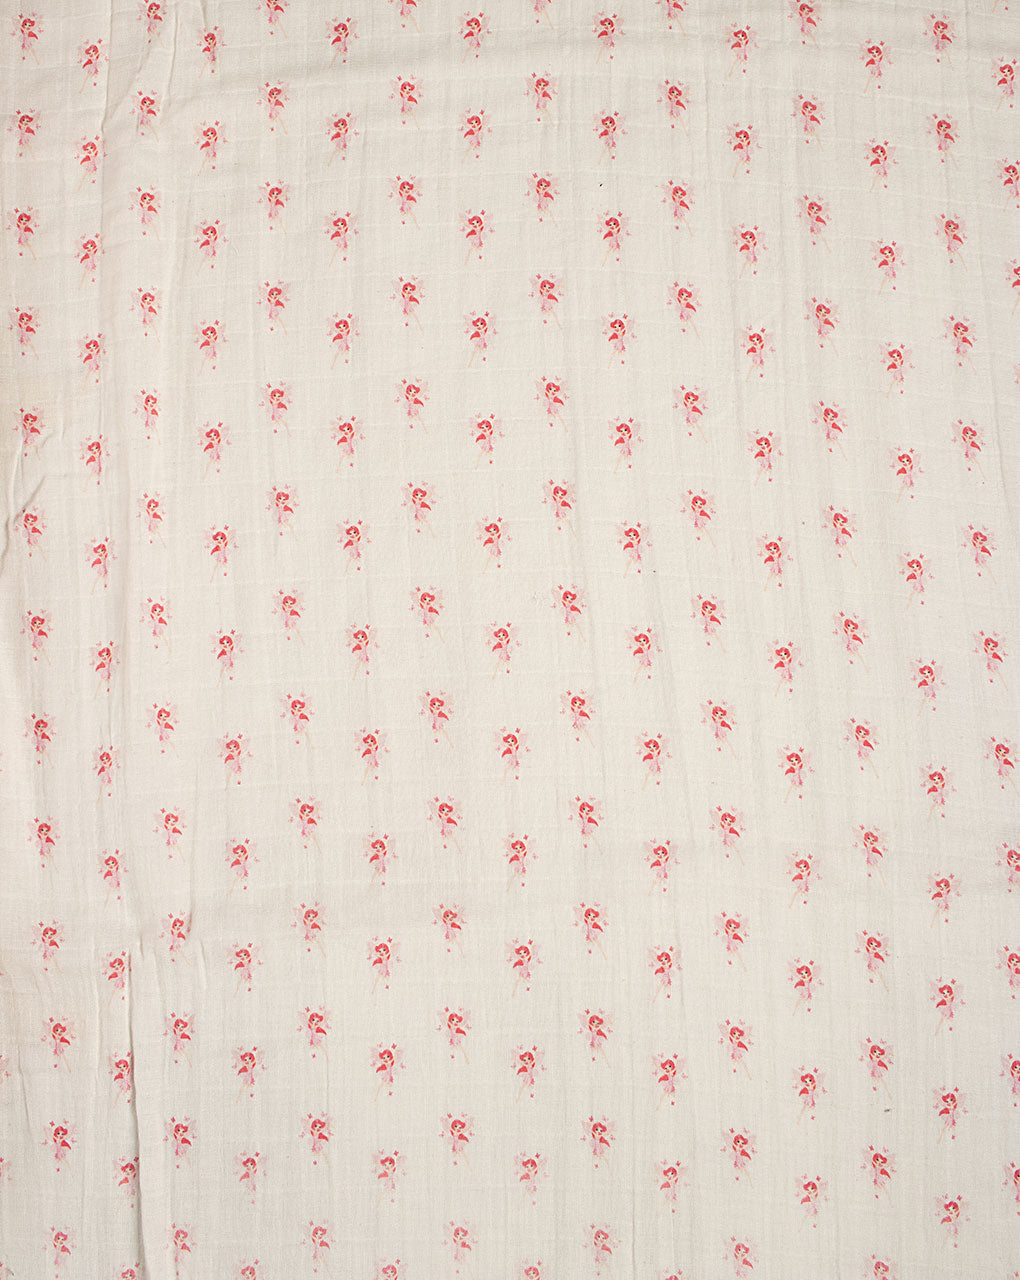 Pink Cotton Fabric at Rs 150/meter in Mumbai